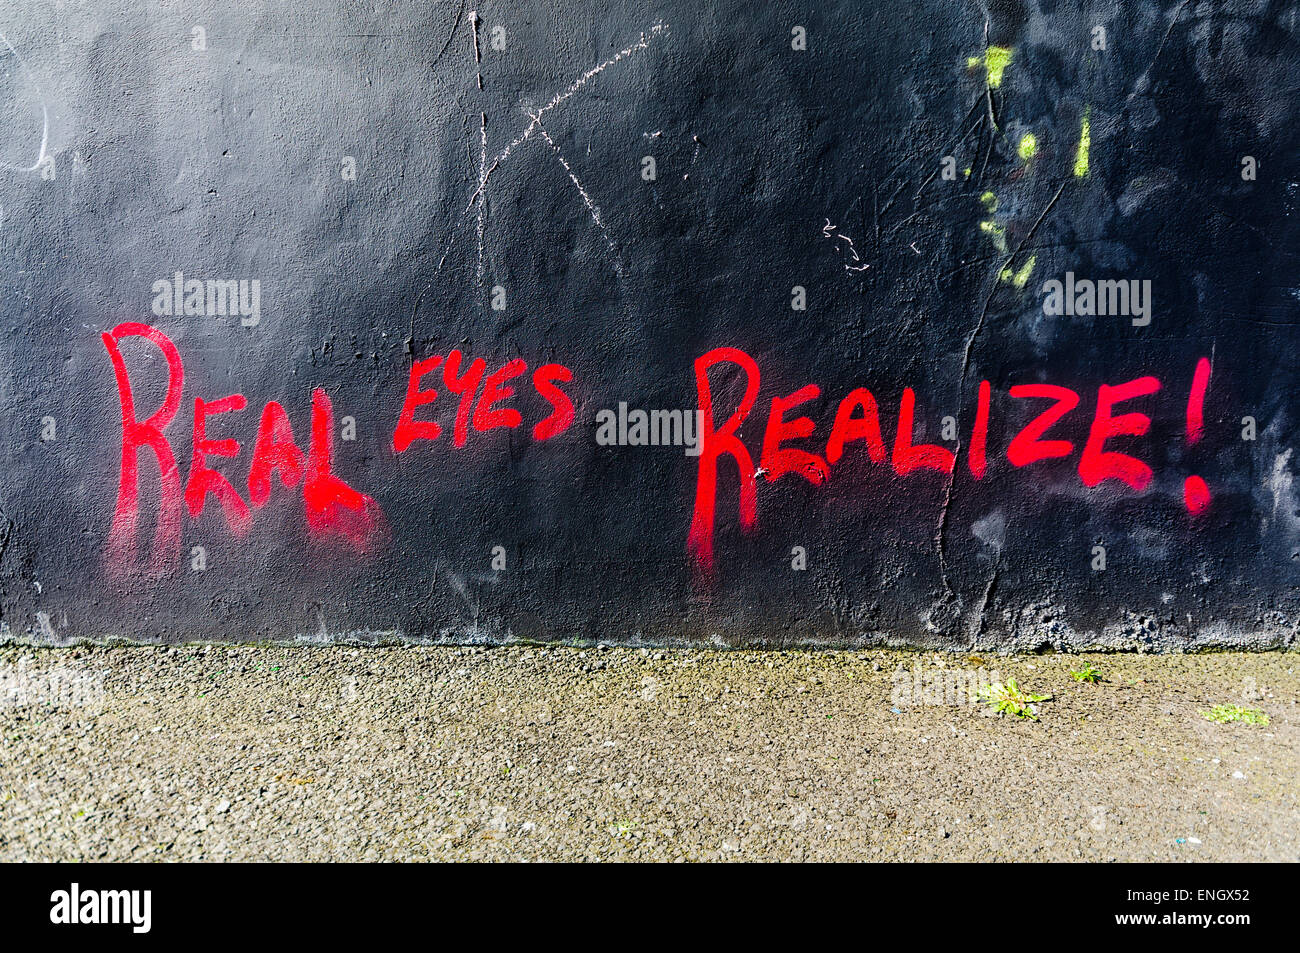 Graffiti on a wall saying 'Real eyes. realize!' Stock Photo